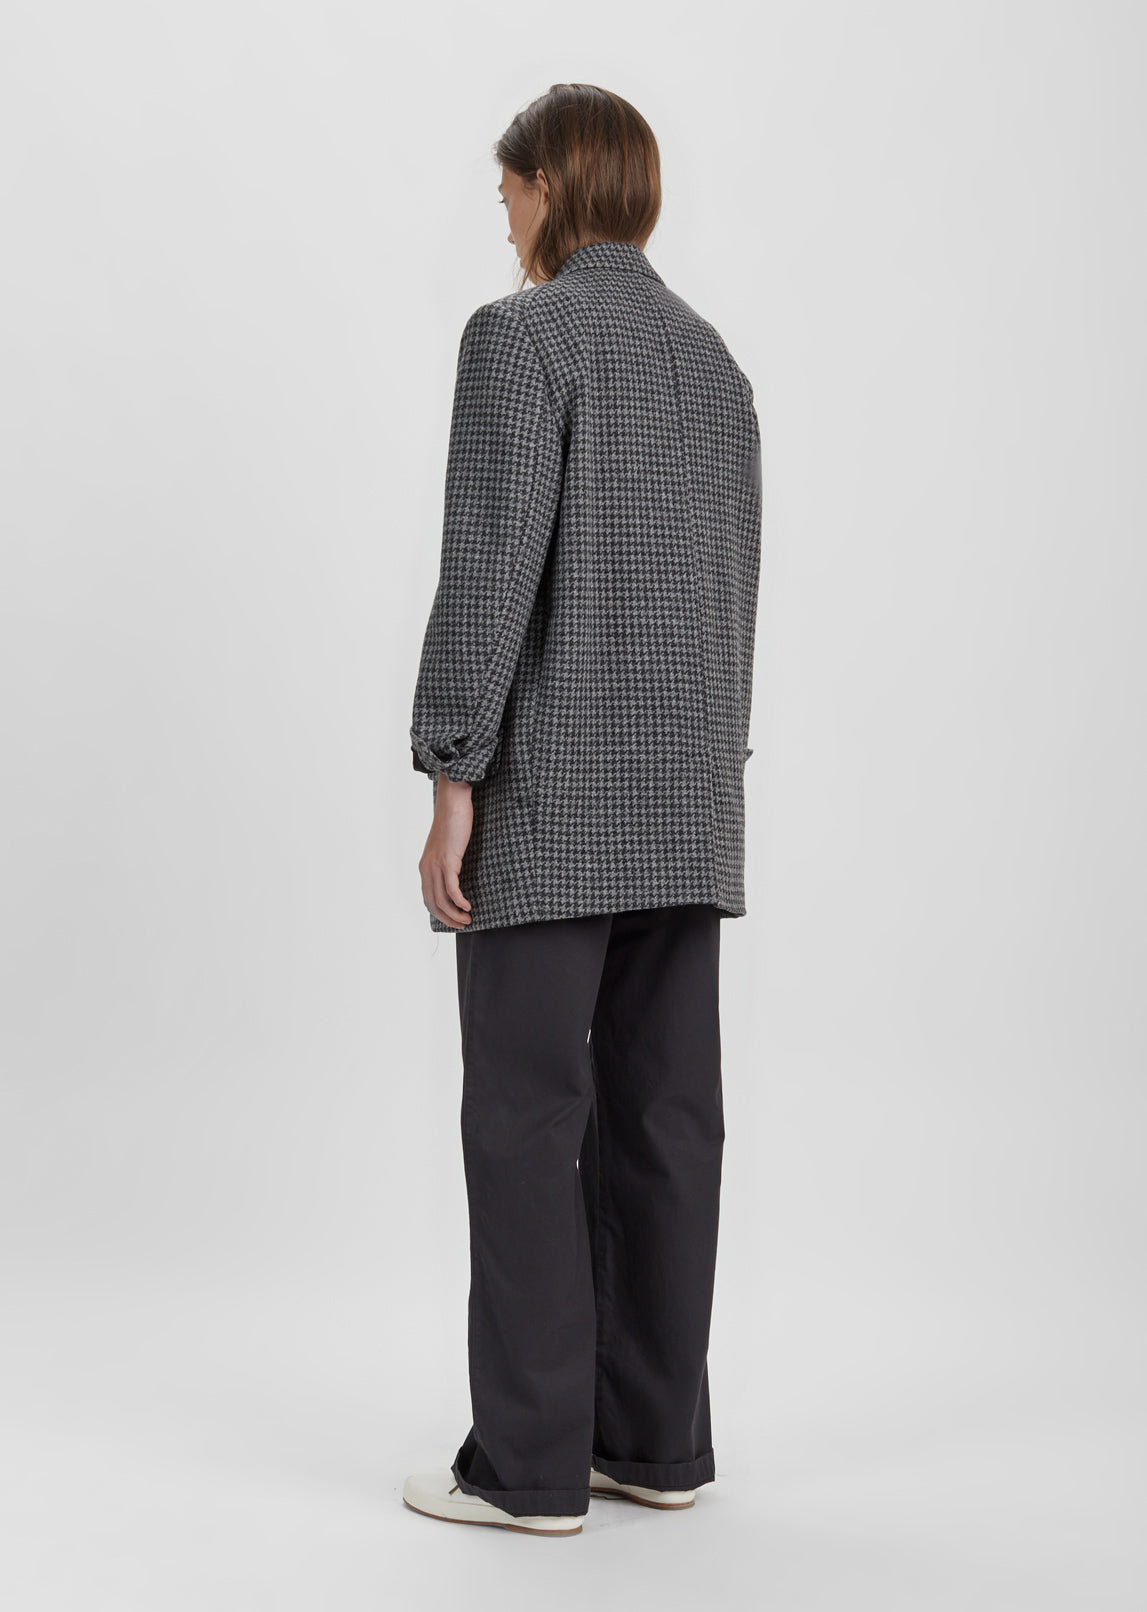 Irox Oversized Tweed Jacket by Isabel Marant Etoile- La Garçonne